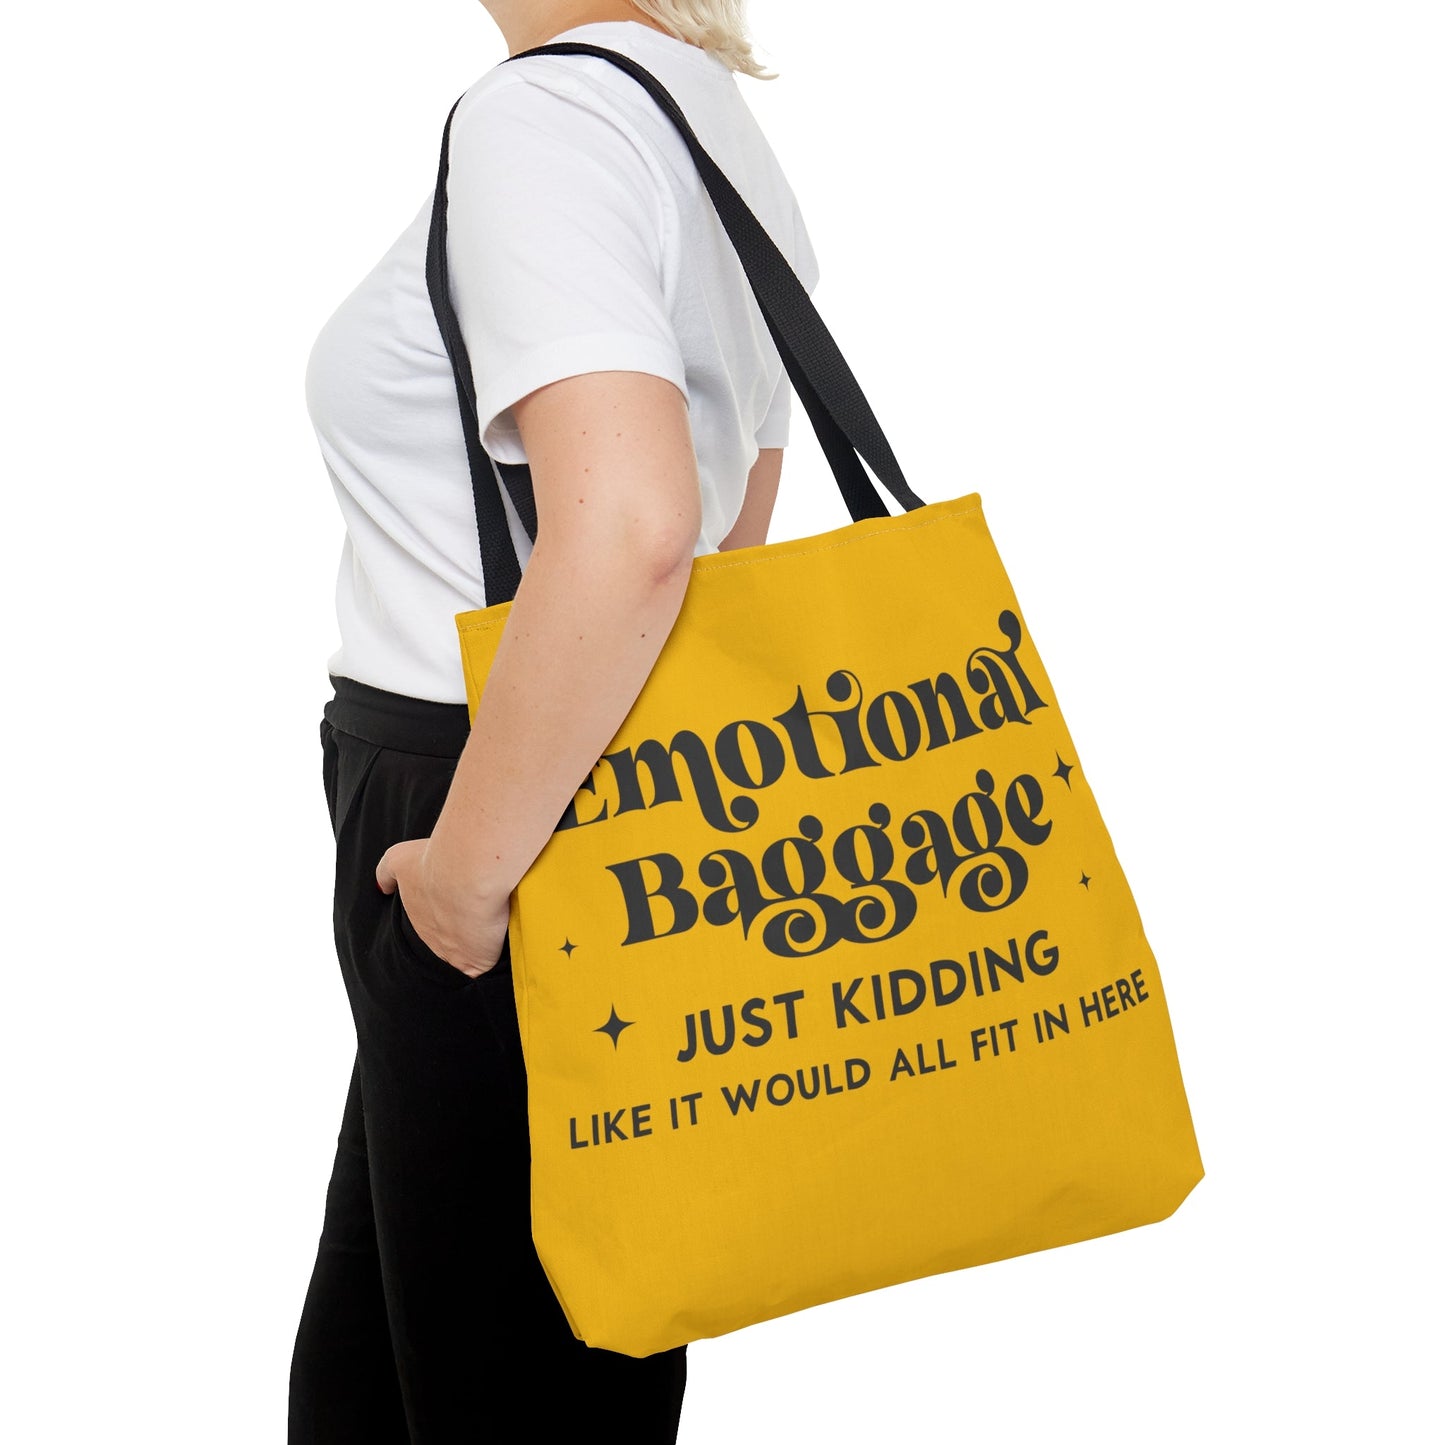 Emotional Baggage Yellow Tote Bag - holistichunnie.com